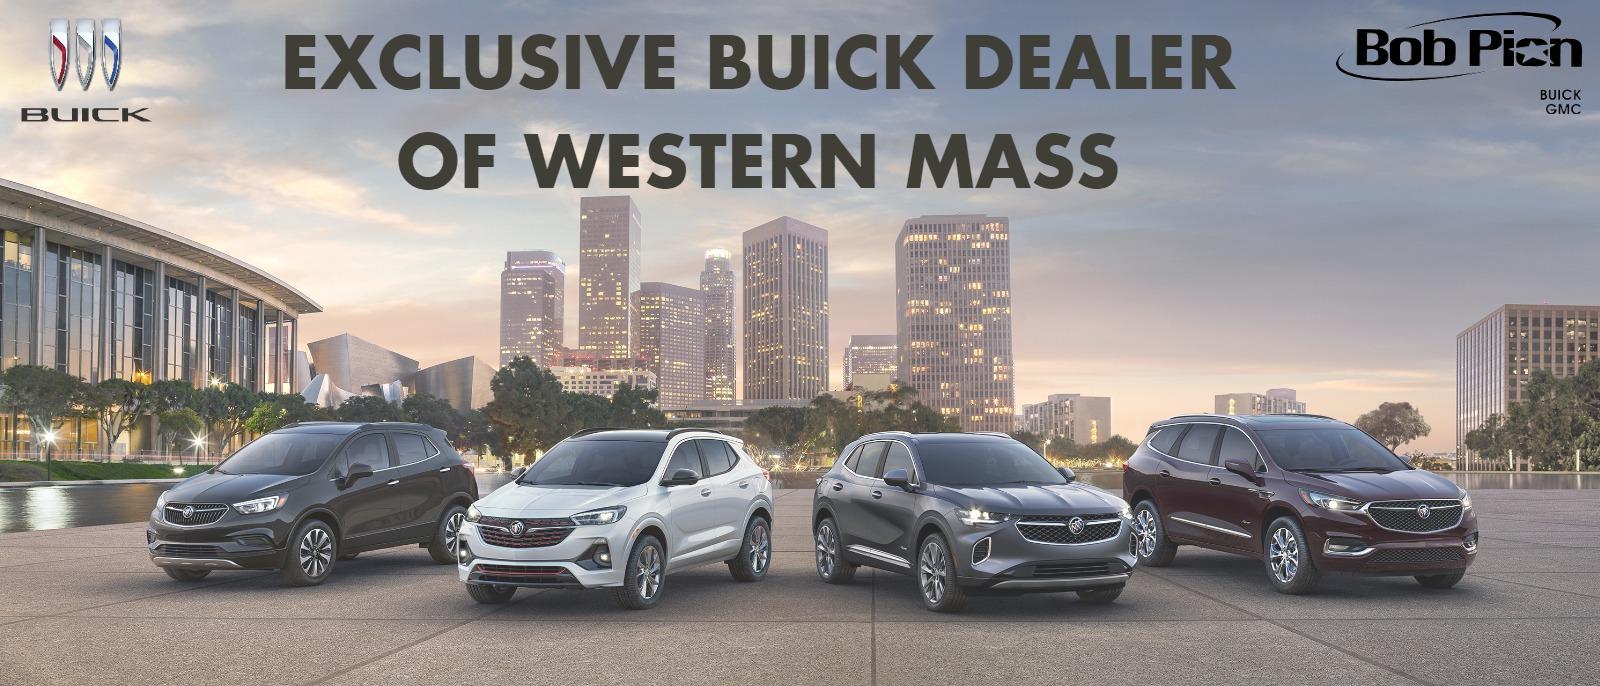 Exclusive Buick Dealer of Western Mass